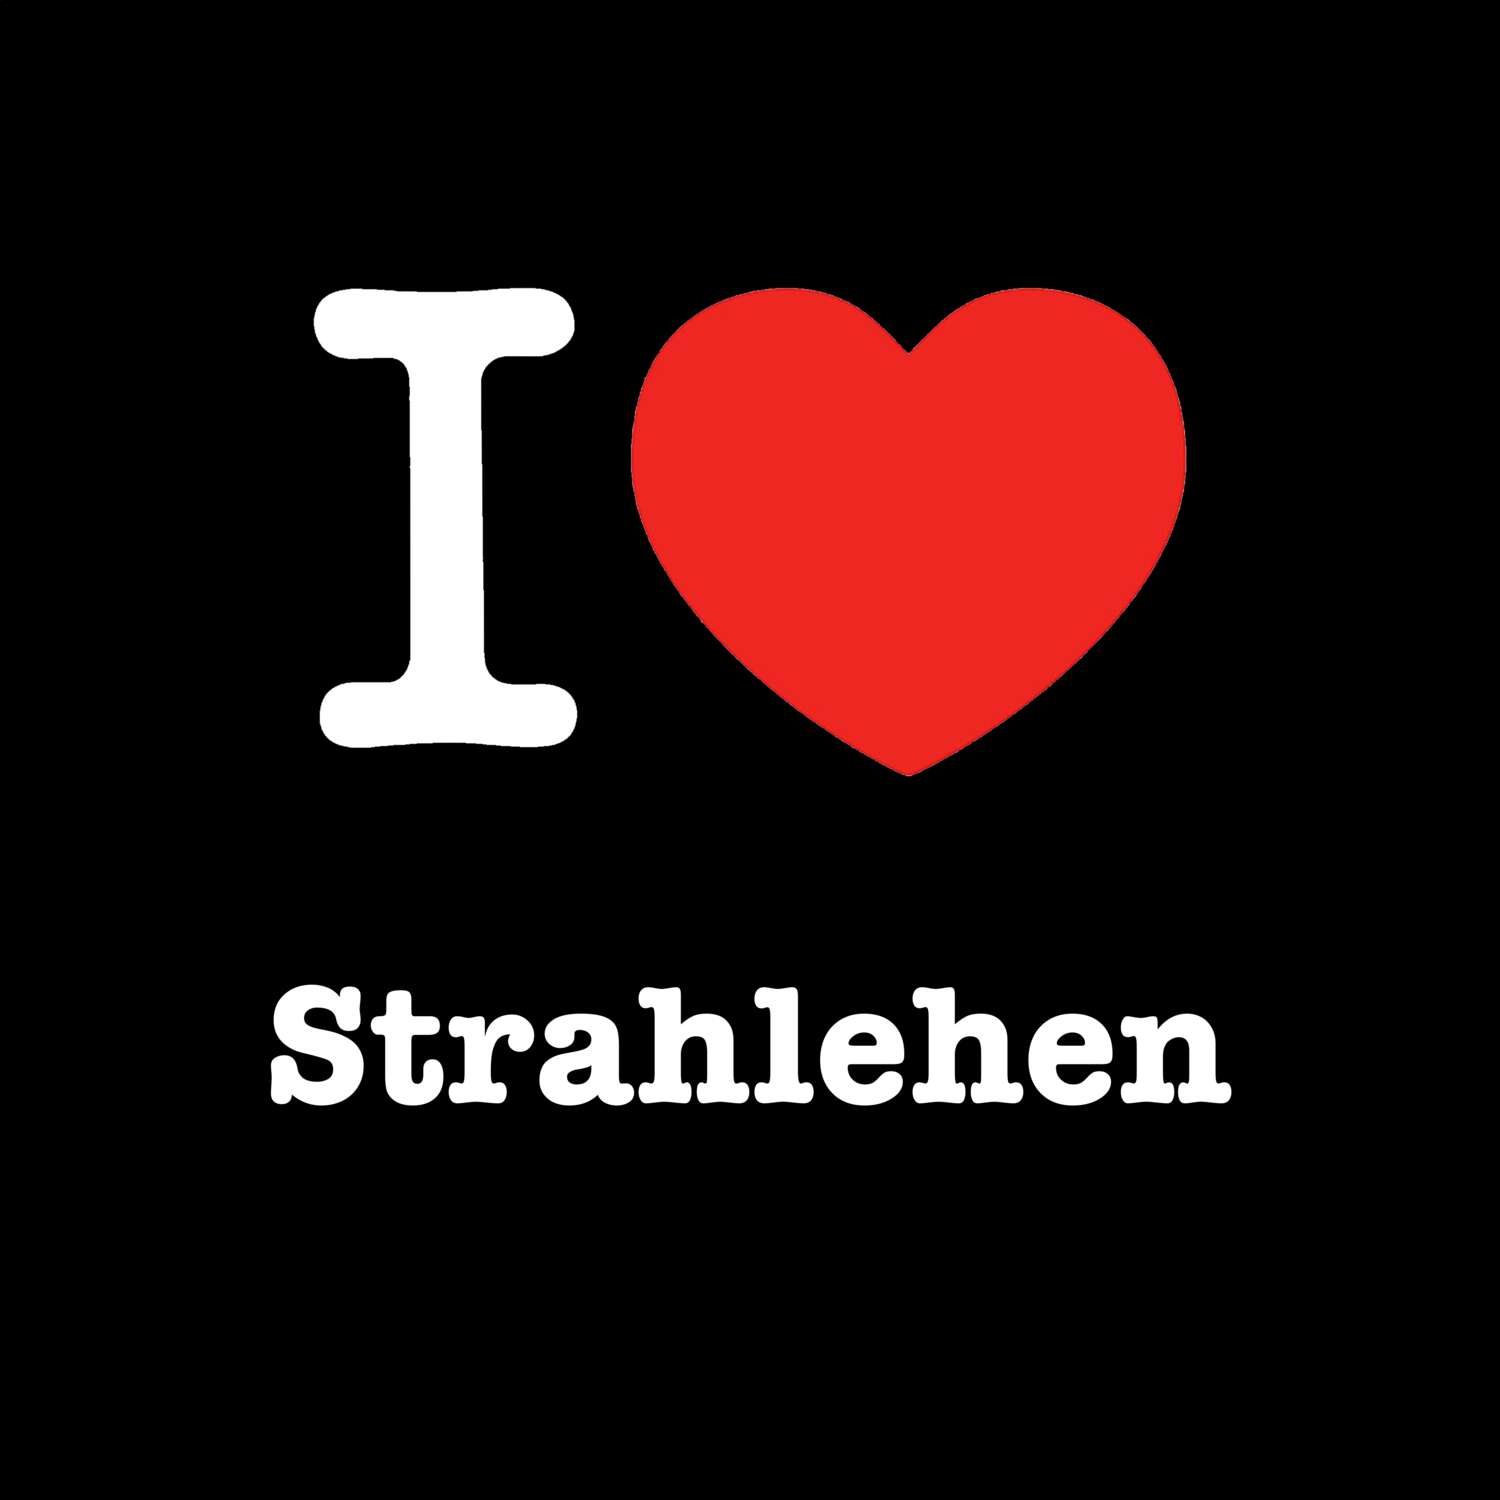 Strahlehen T-Shirt »I love«